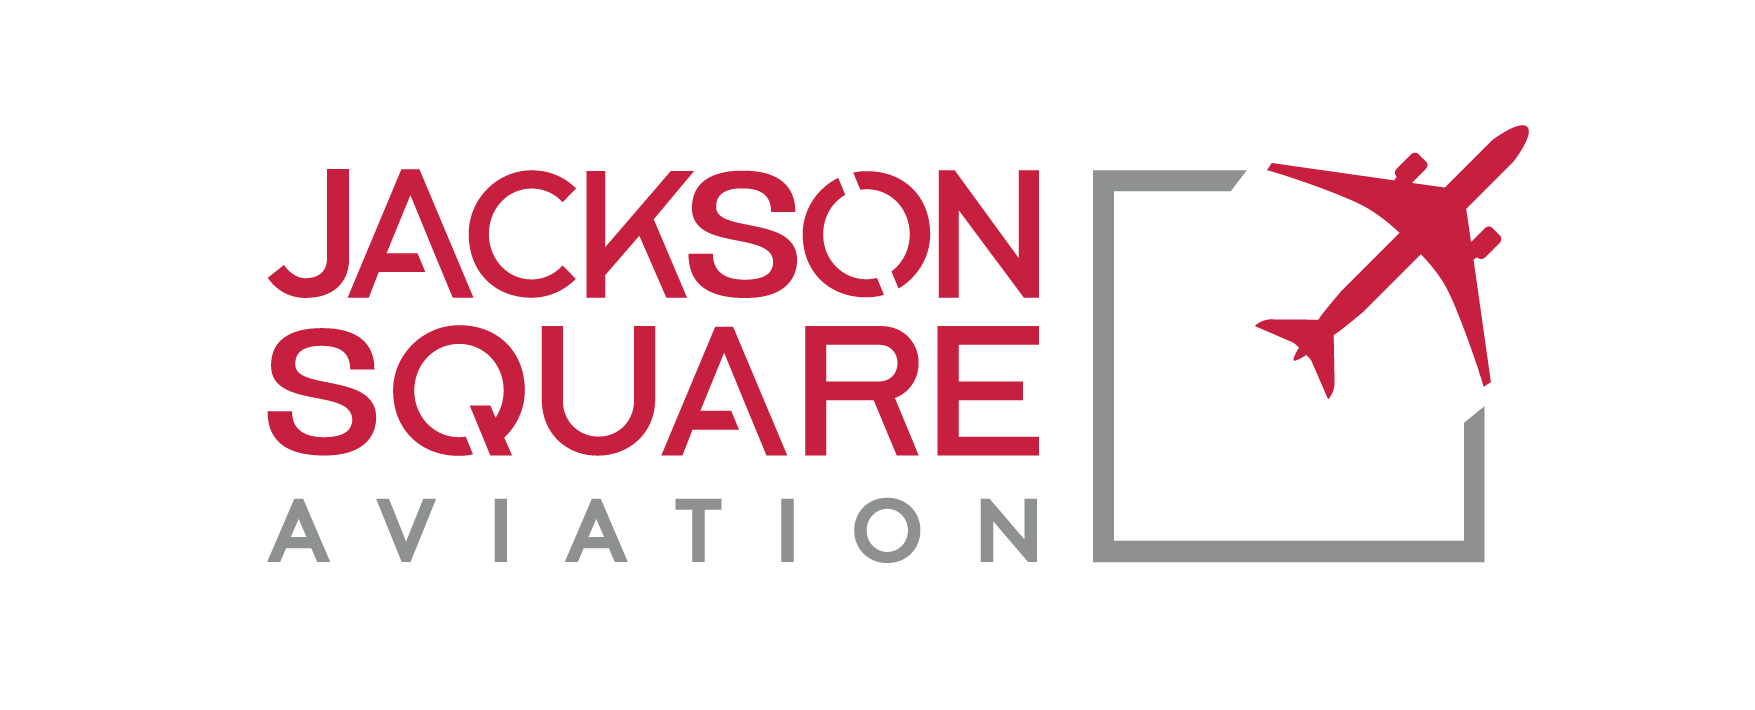 Jackson Square Aviation